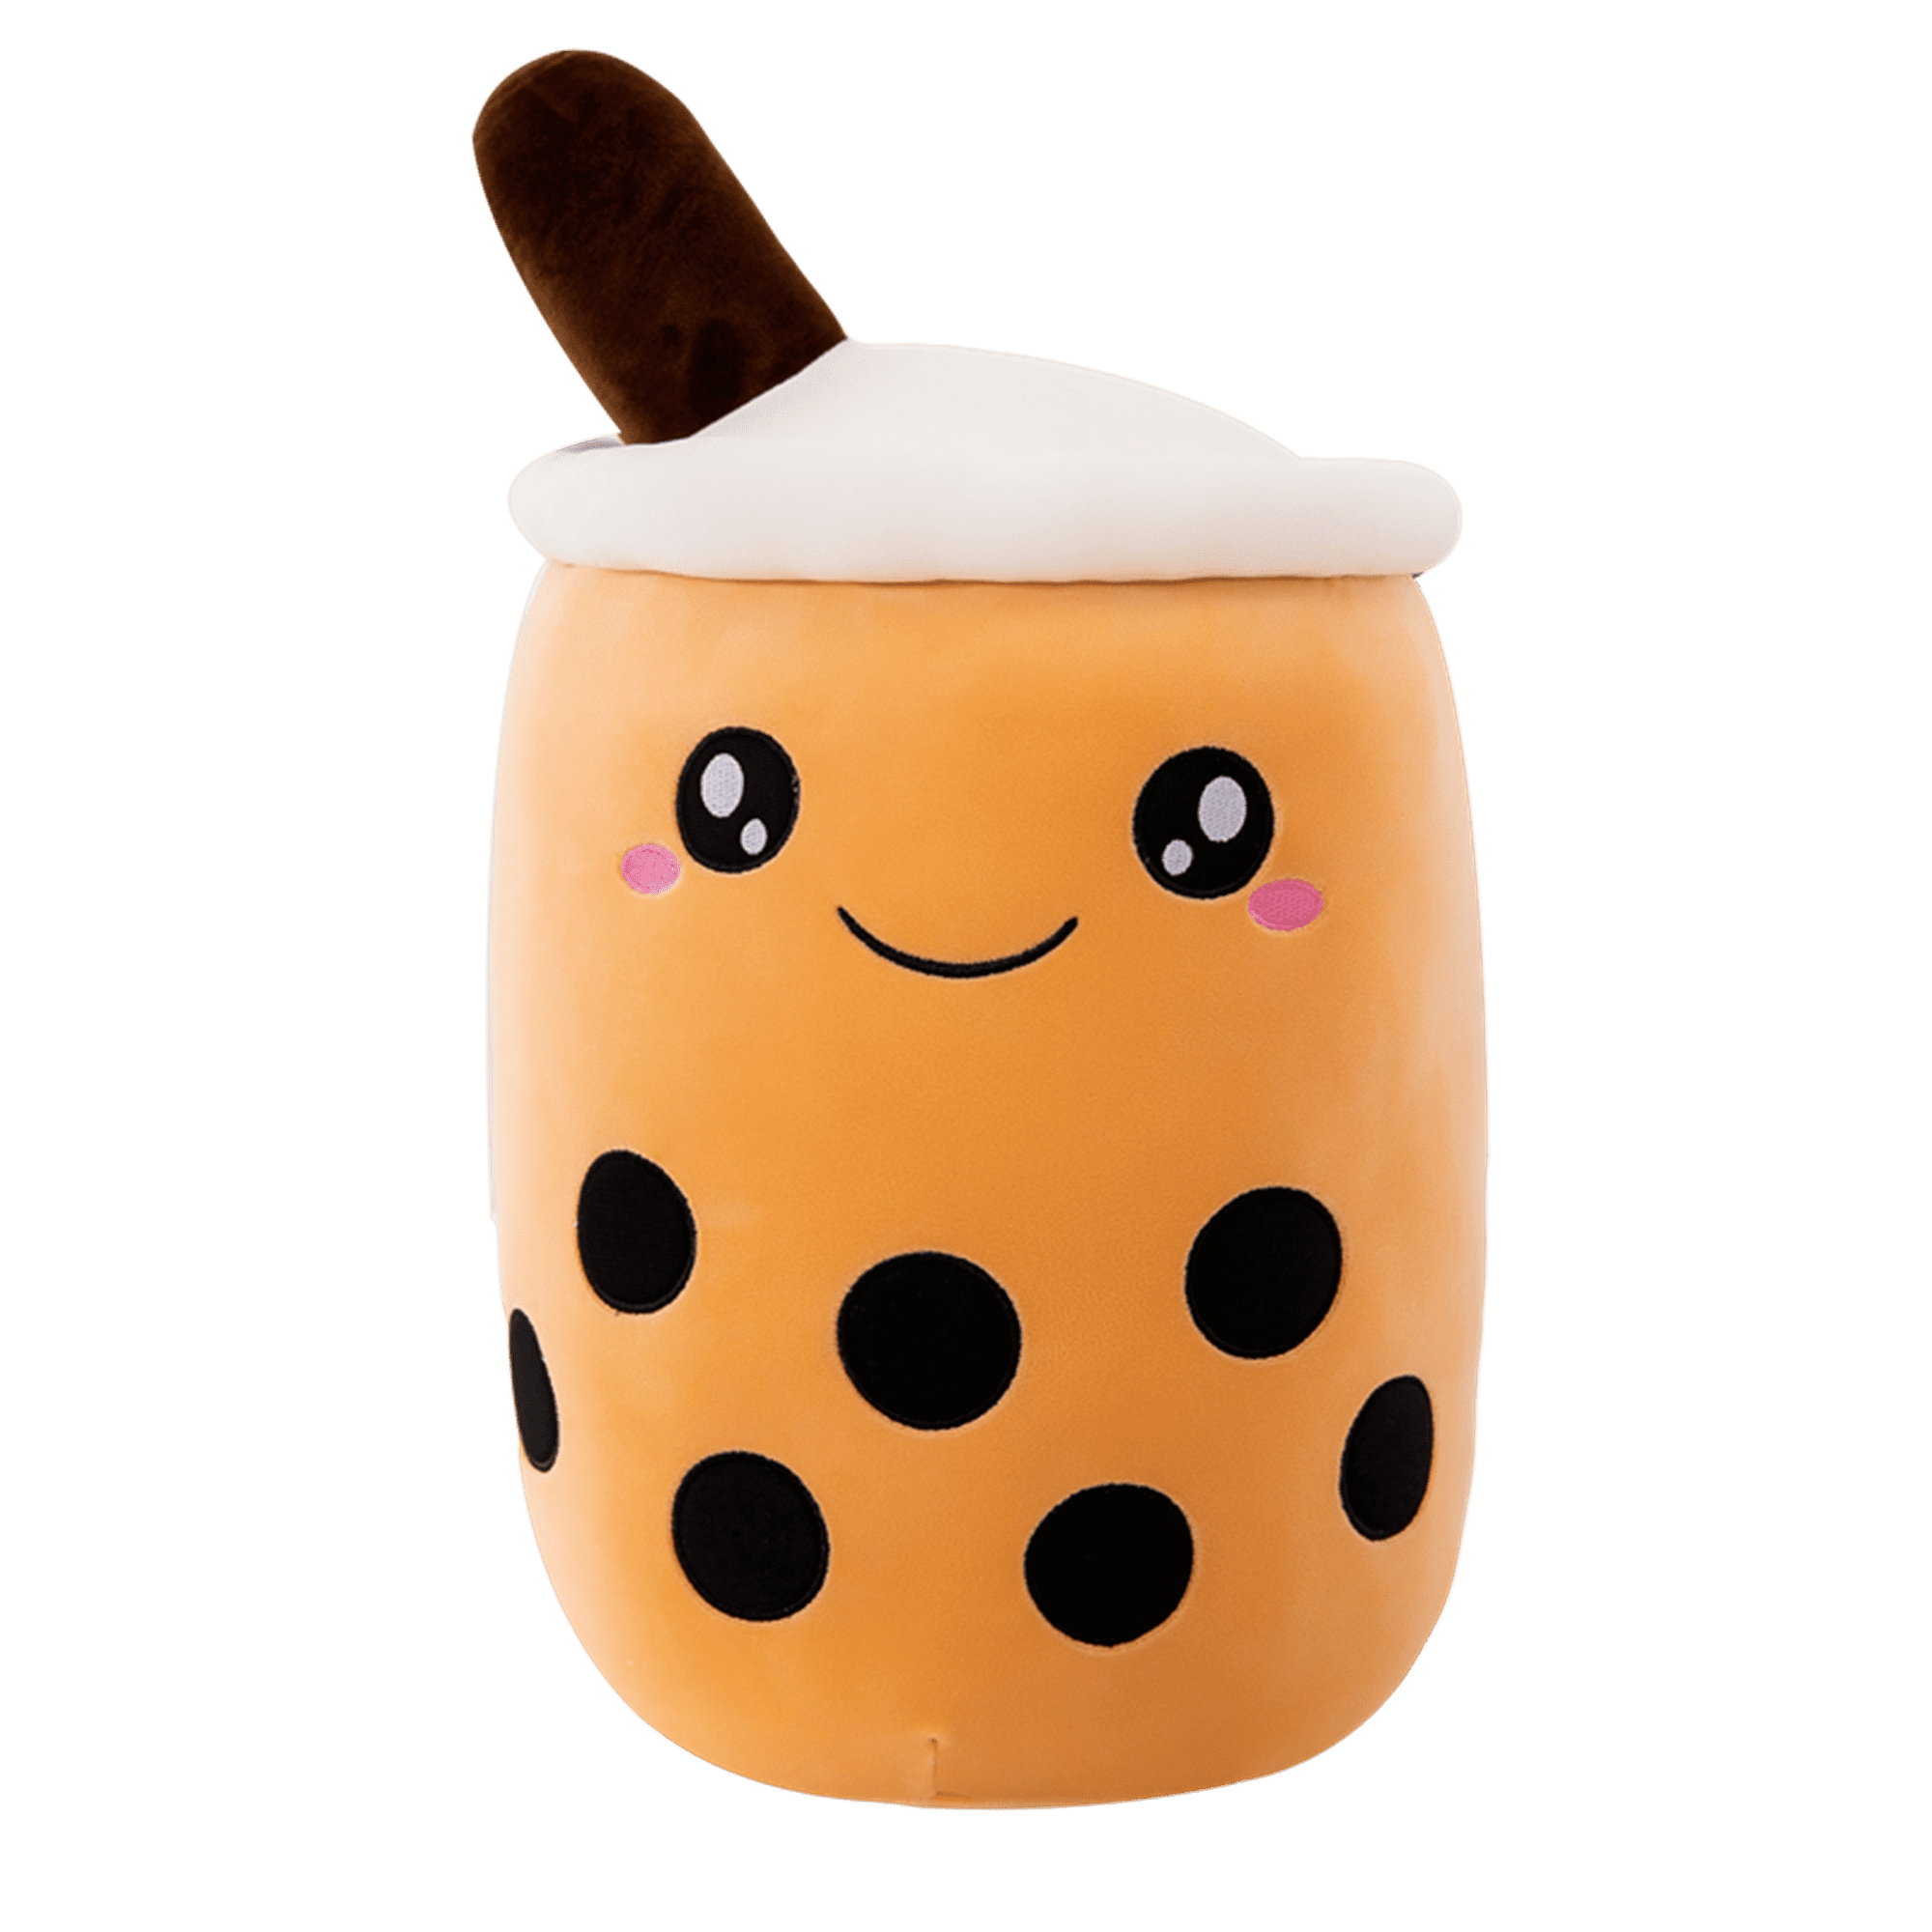 Random Boba Milk Tea Plushie Toy Soft Stuffed In Blind Box Mystery